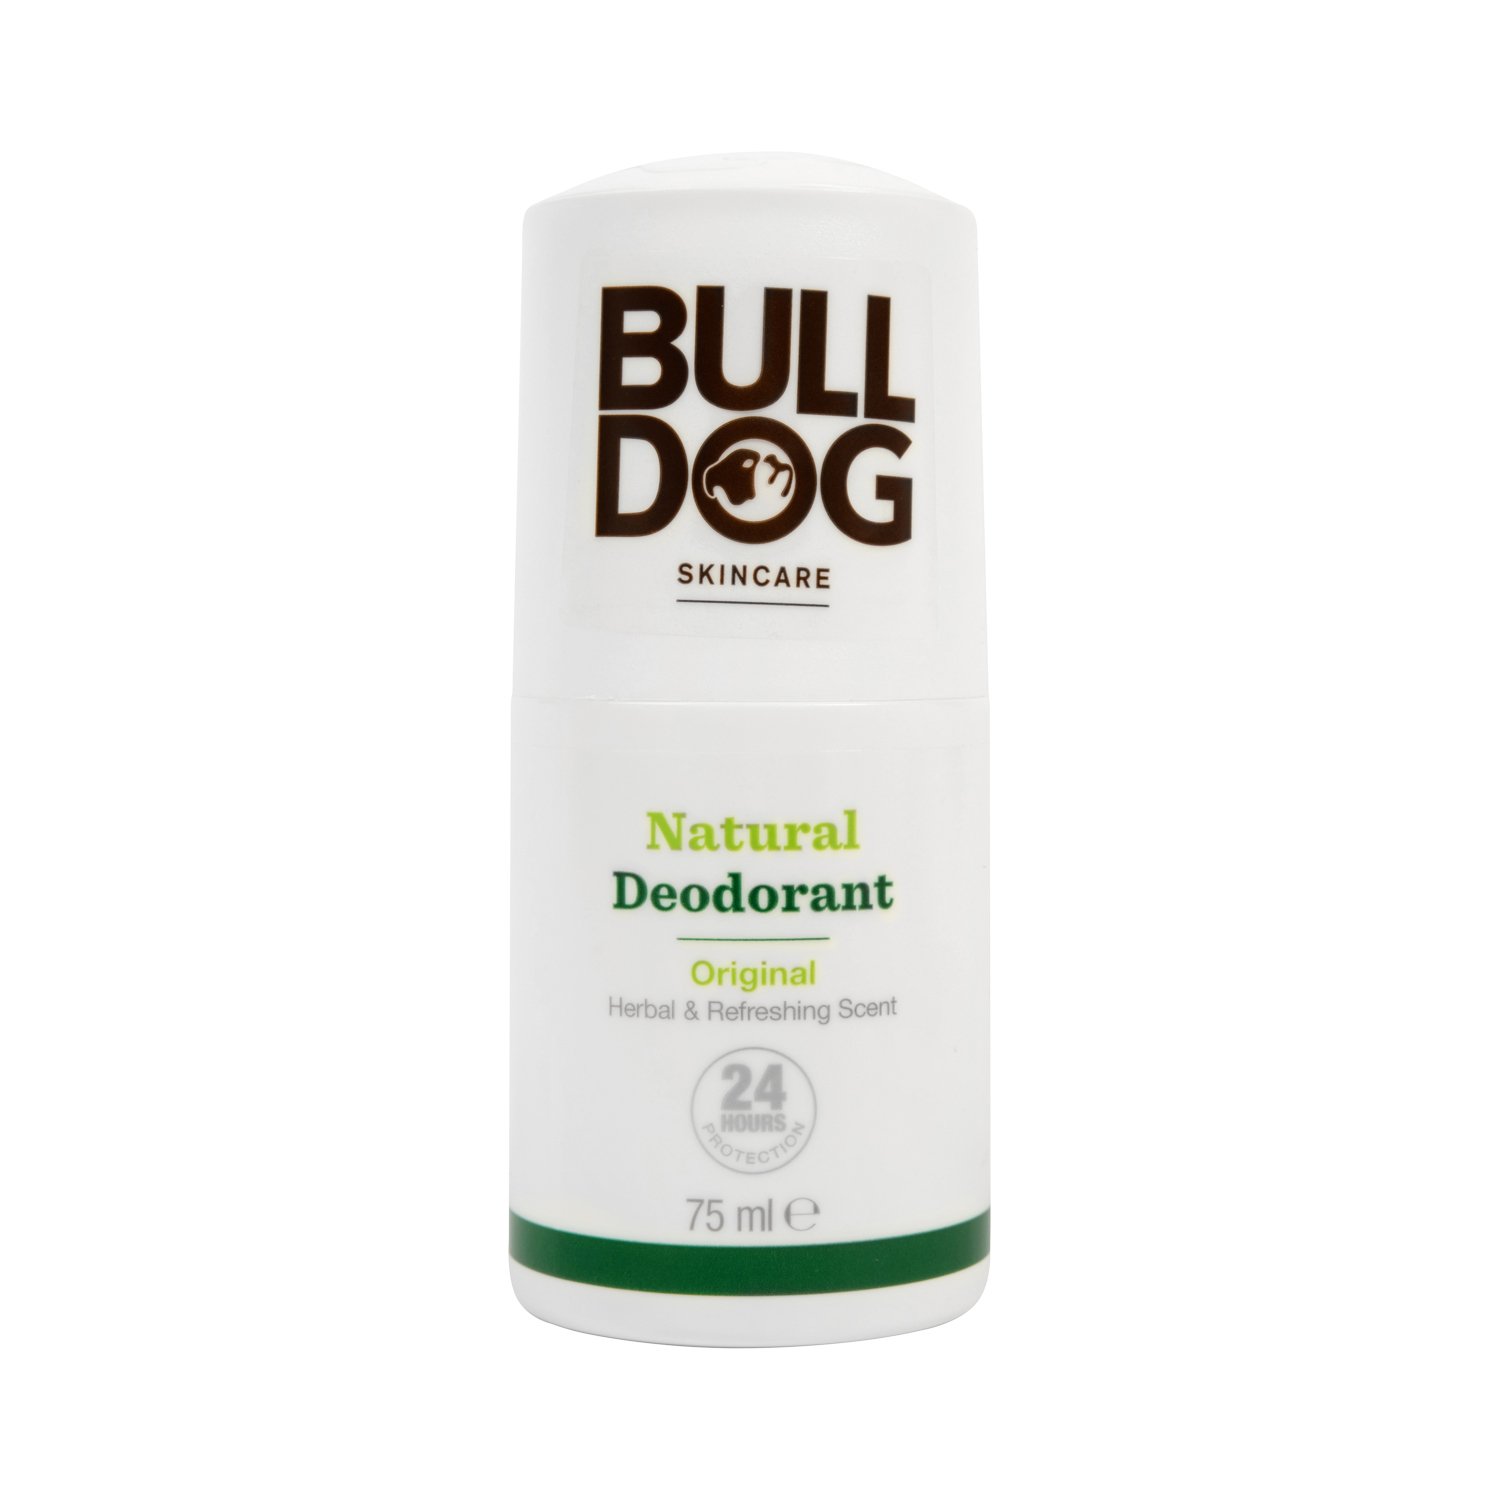 Bulldog - Original Deodorant